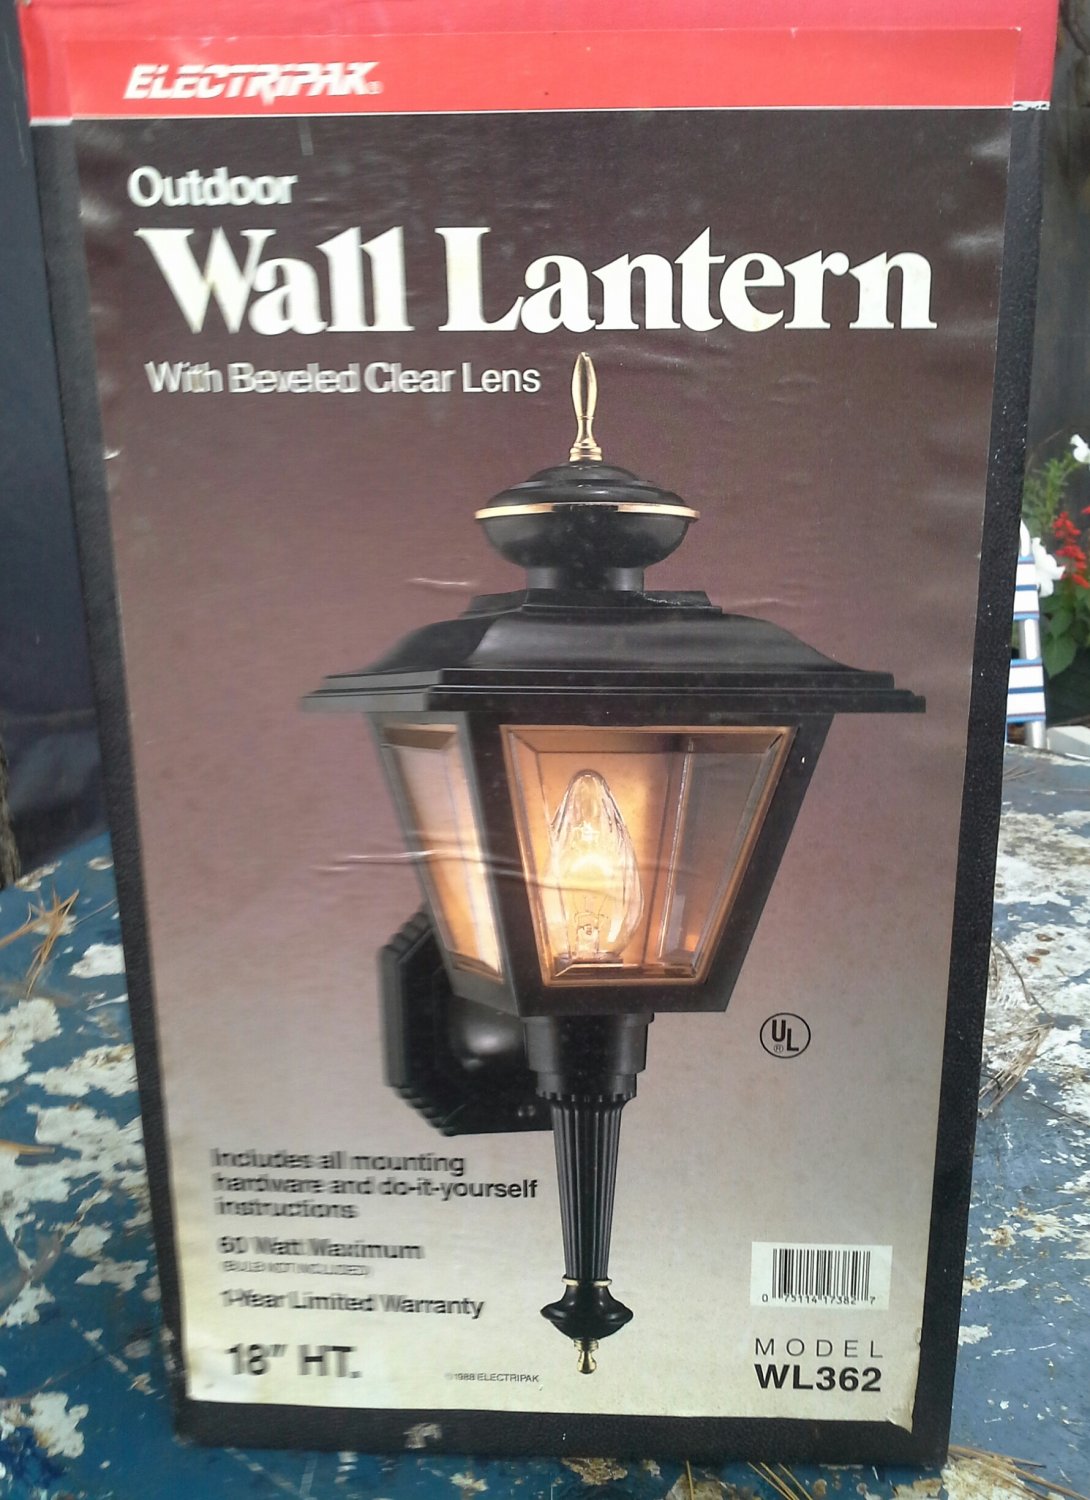 Electripak Outdoor Wall Mount Lantern